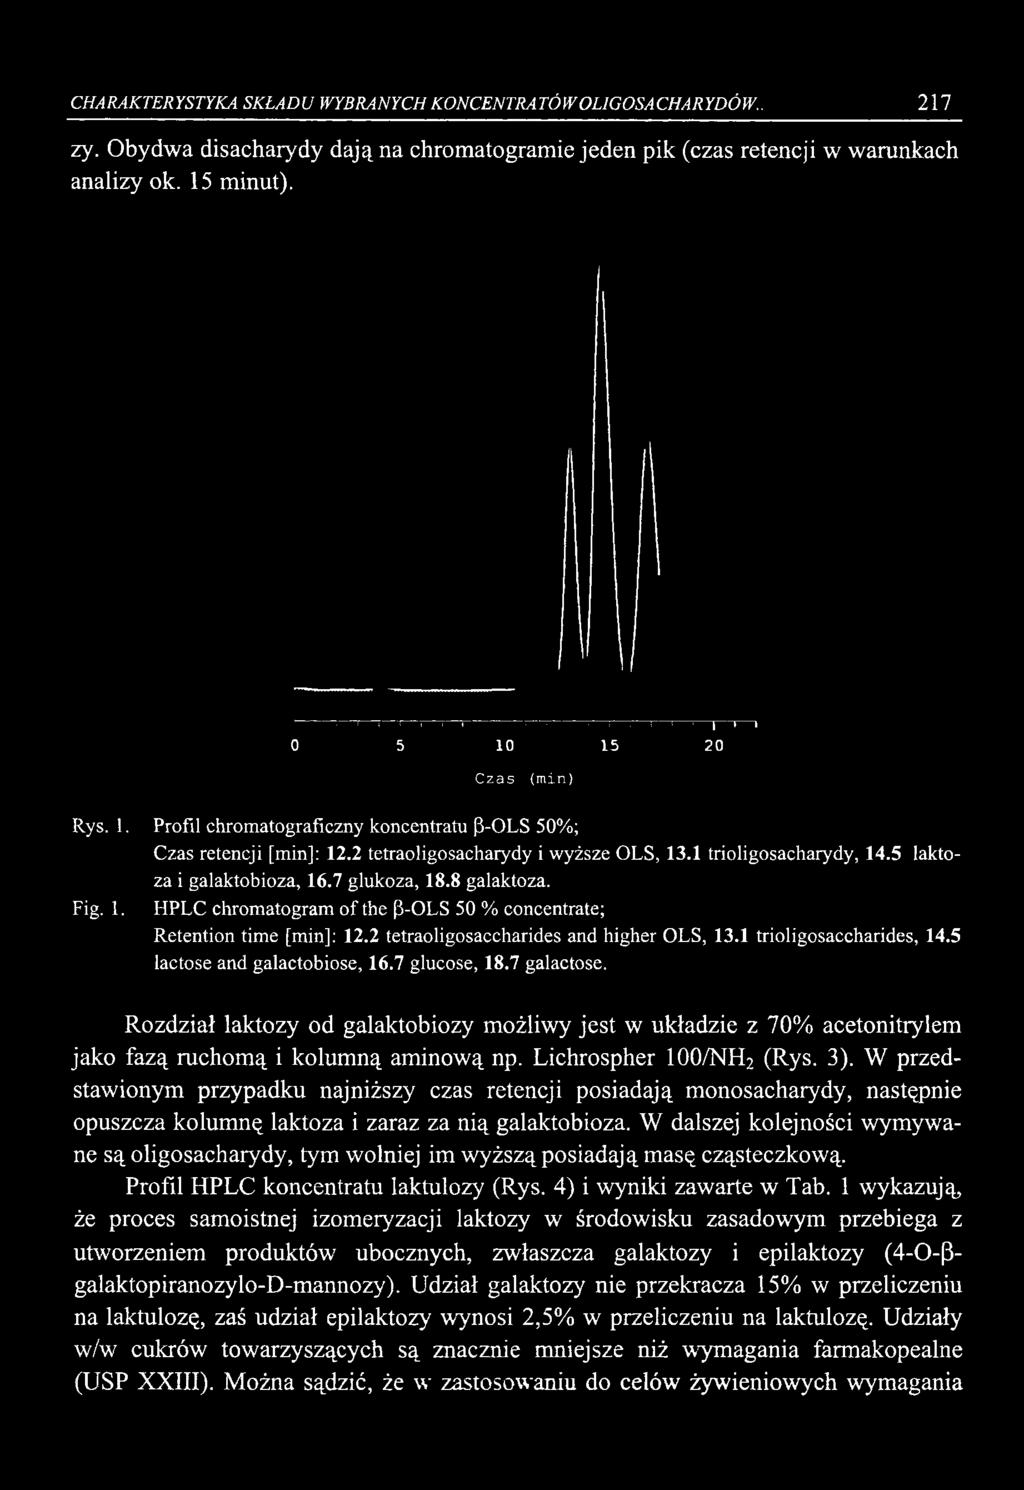 1 trioligosacharydy, 14.5 laktoza i galaktobioza, 16.7 glukoza, 18.8 galaktoza. Fig. 1. HPLC chromatogram of the β-ols 50 % concentrate; Retention time [min]: 12.